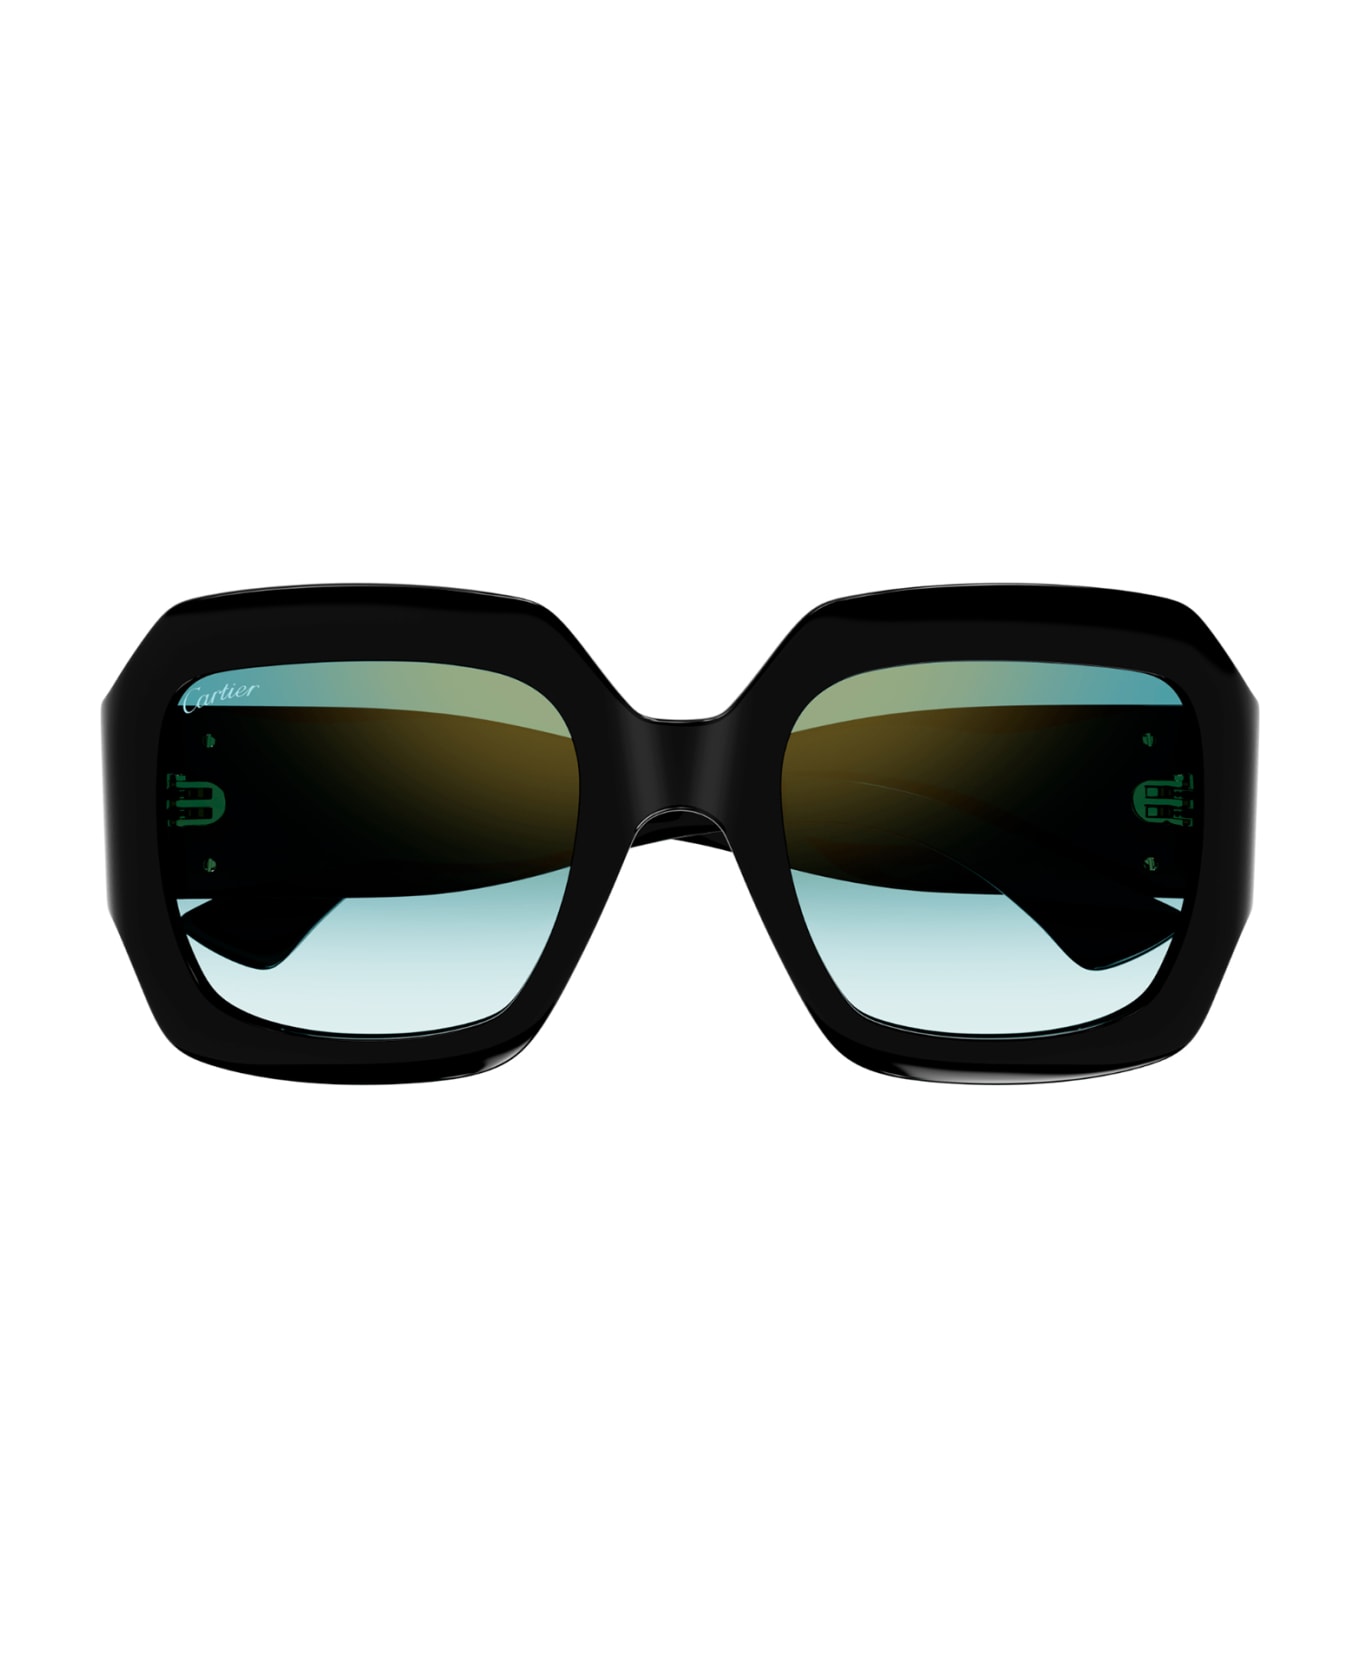 Cartier Eyewear Ct0434s Sunglasses - Black Black Green サングラス